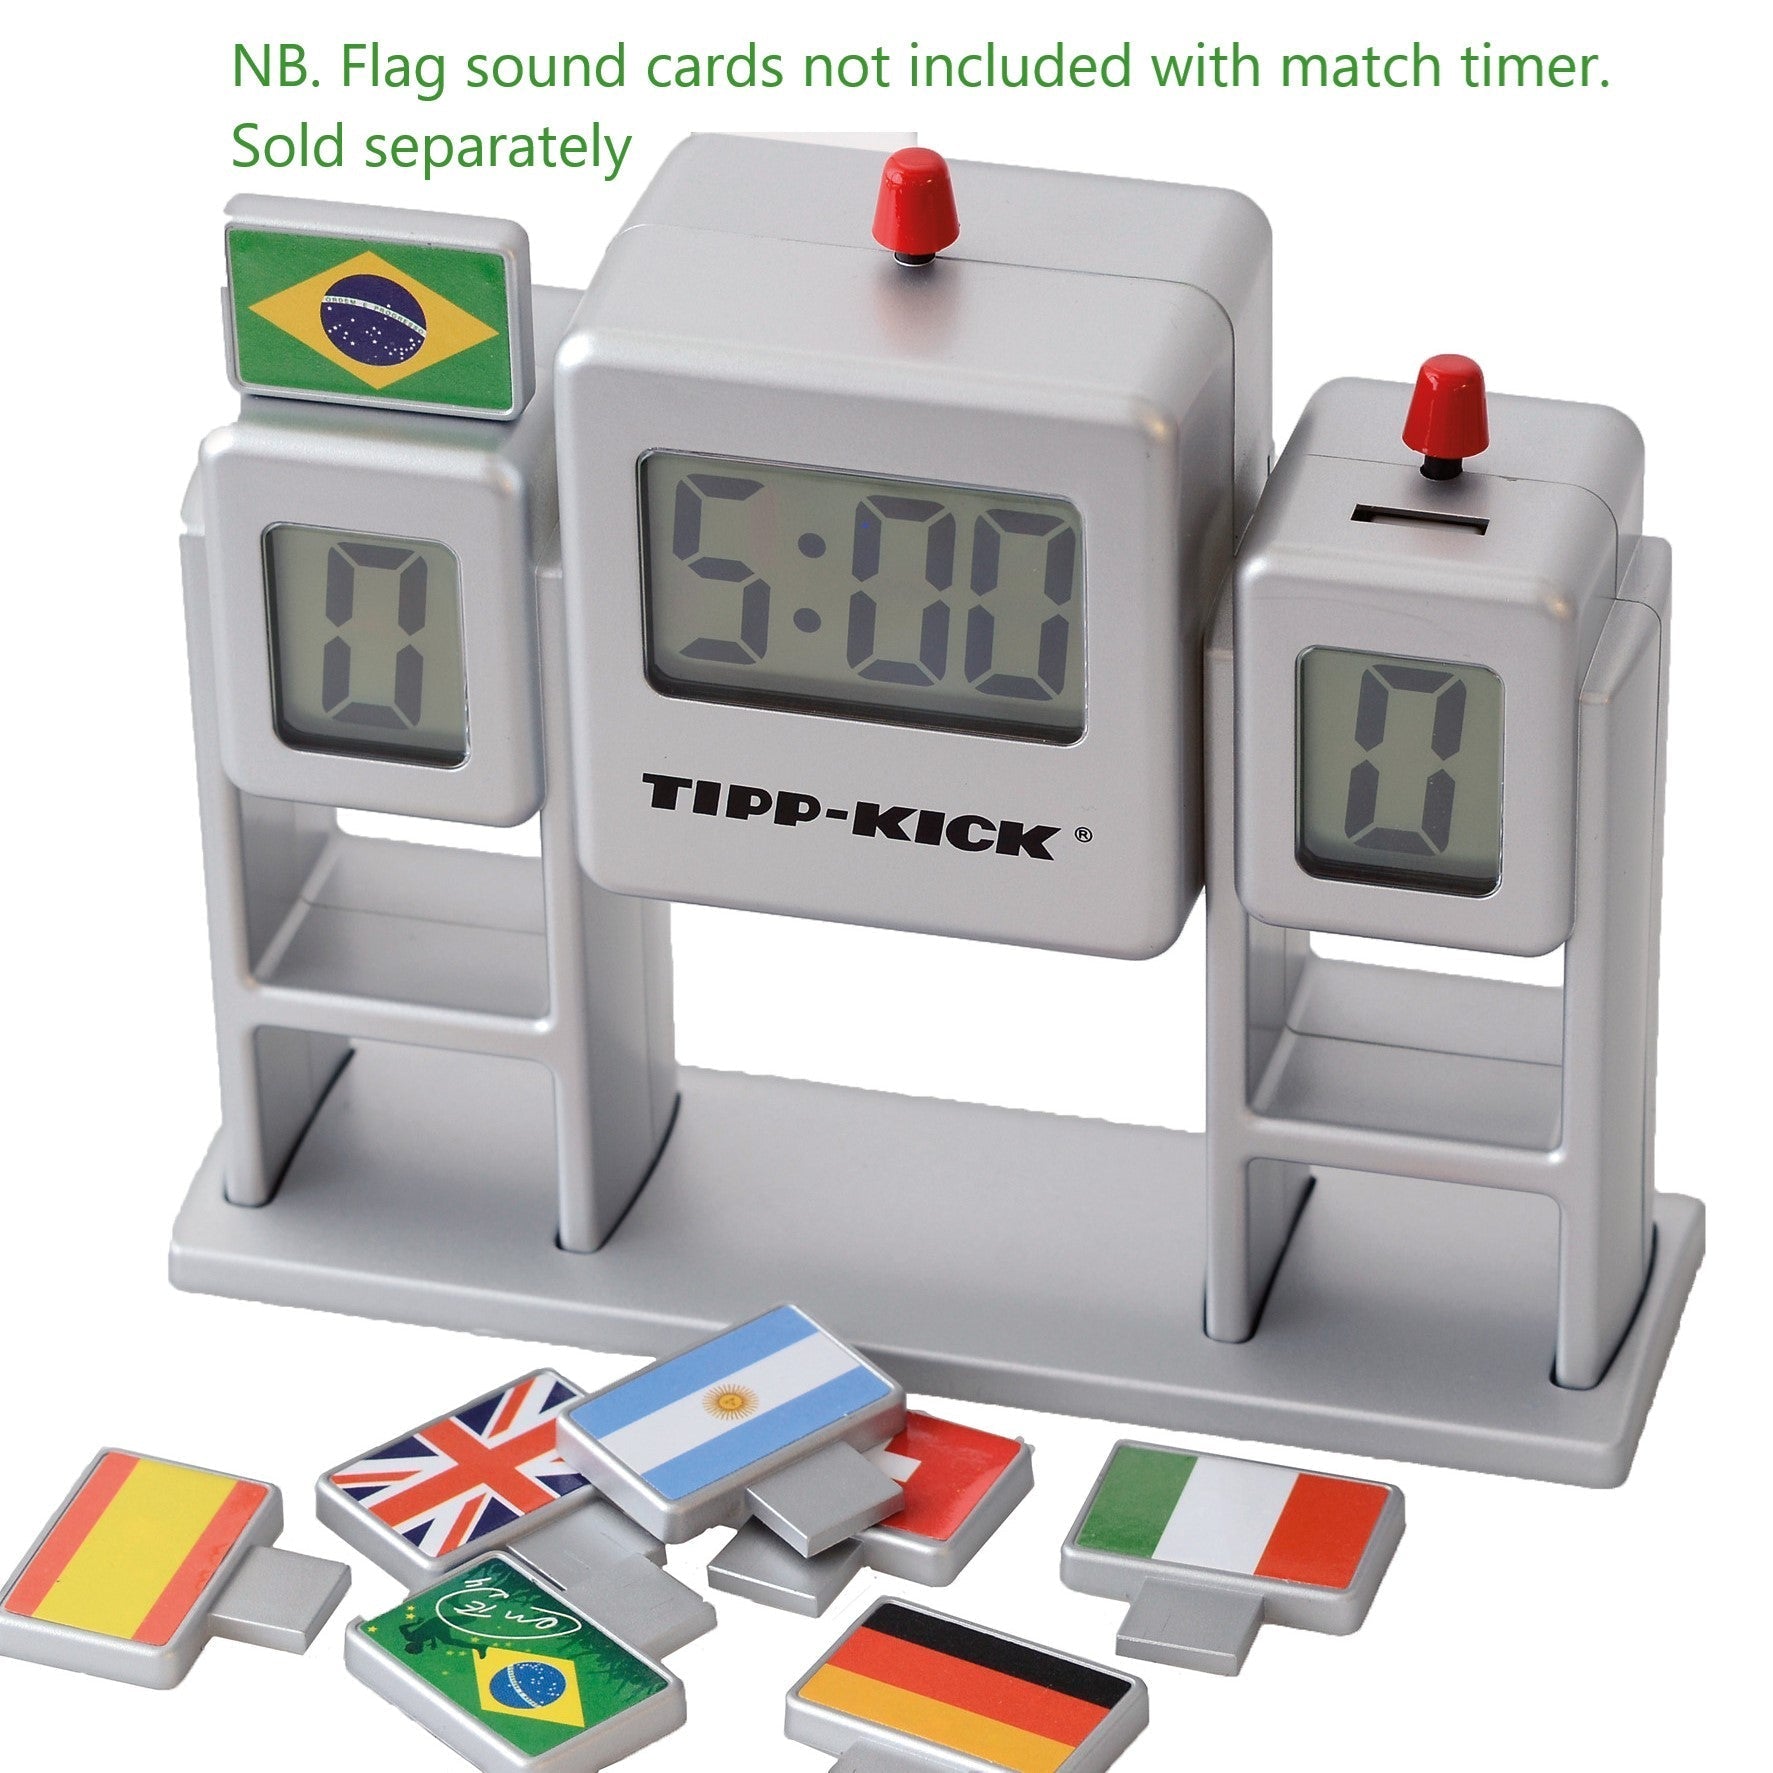 TIPP-KICK Match Timer, Score Board & Sound-Chip Module for Soccer Games